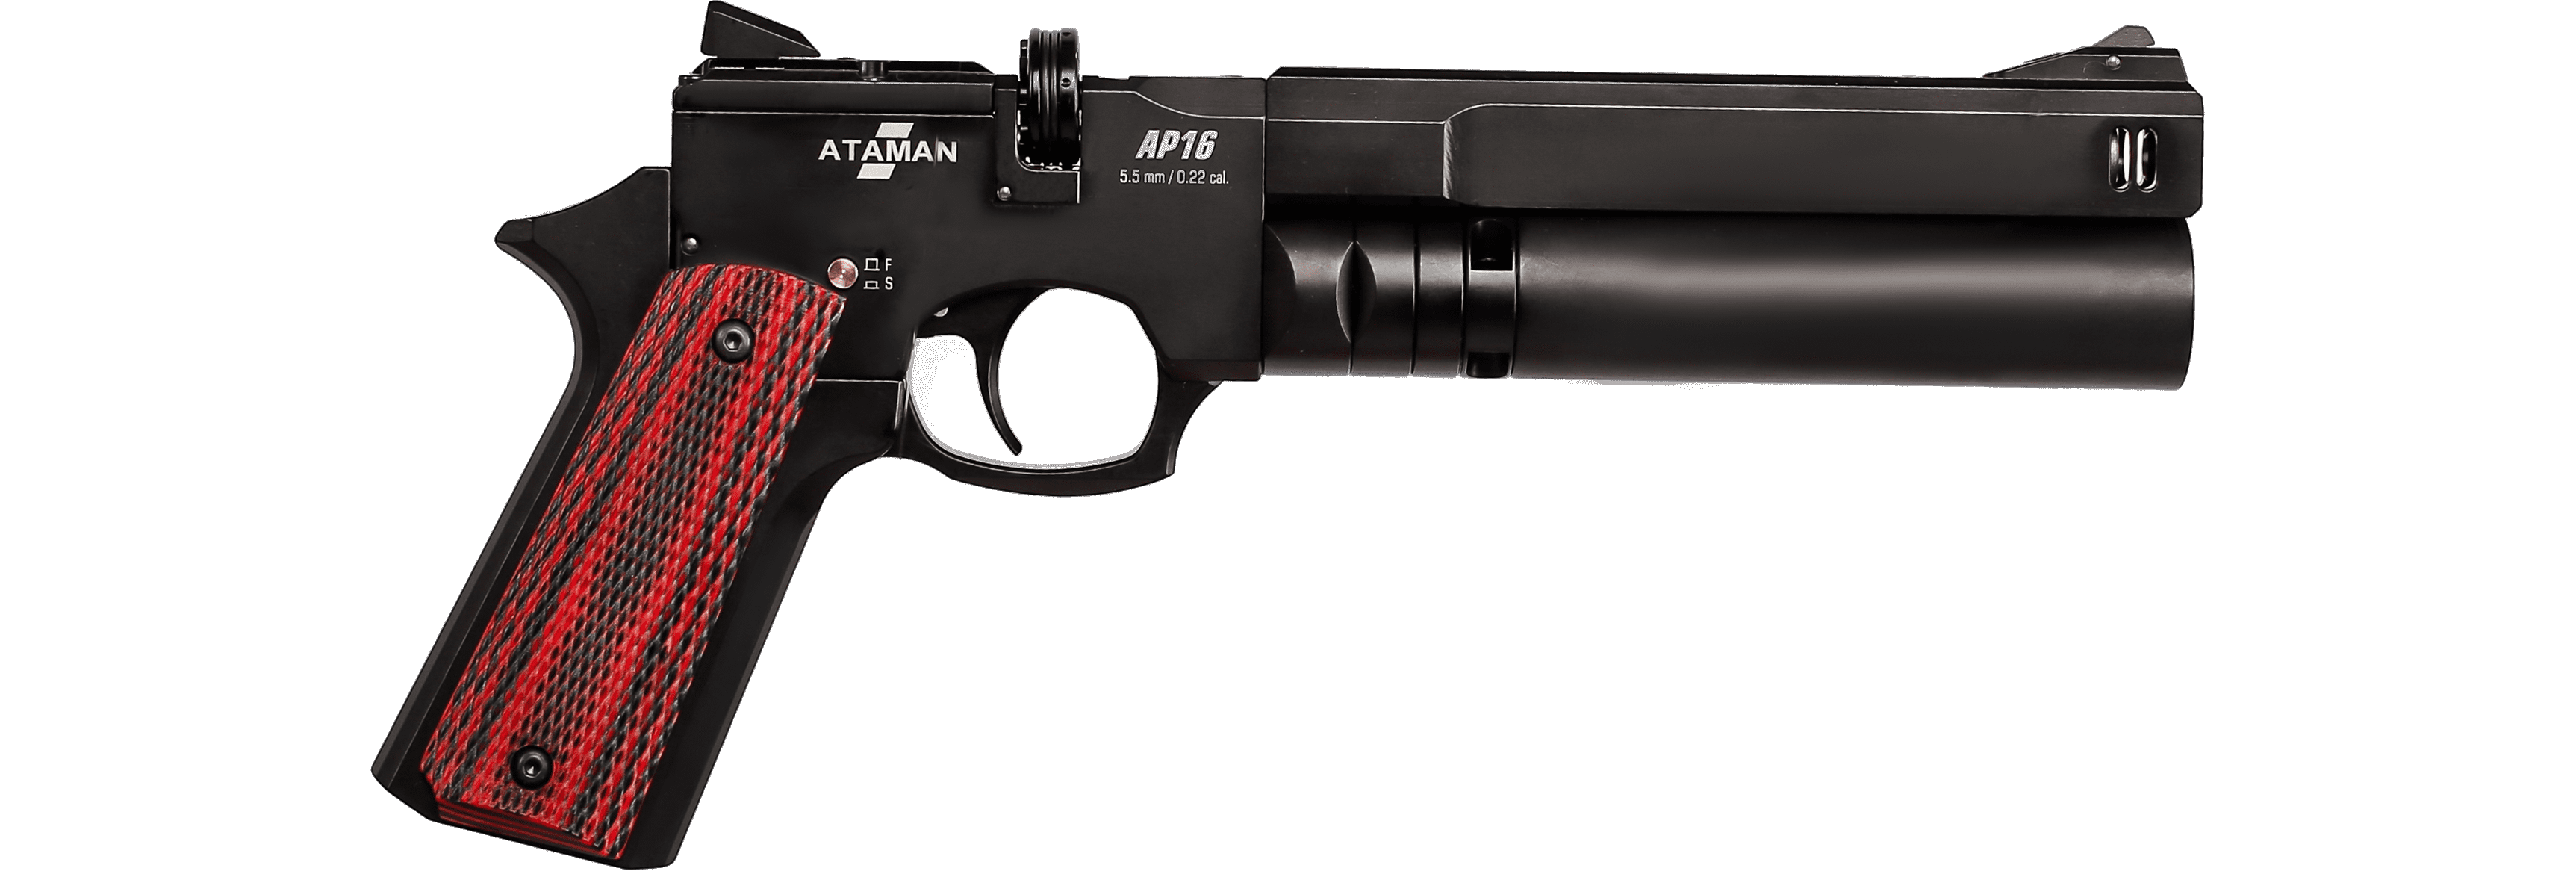 Пневматический PCP пистолет ATAMAN AP16 Black Compact (рукоятка Metal), кал. 5.5мм